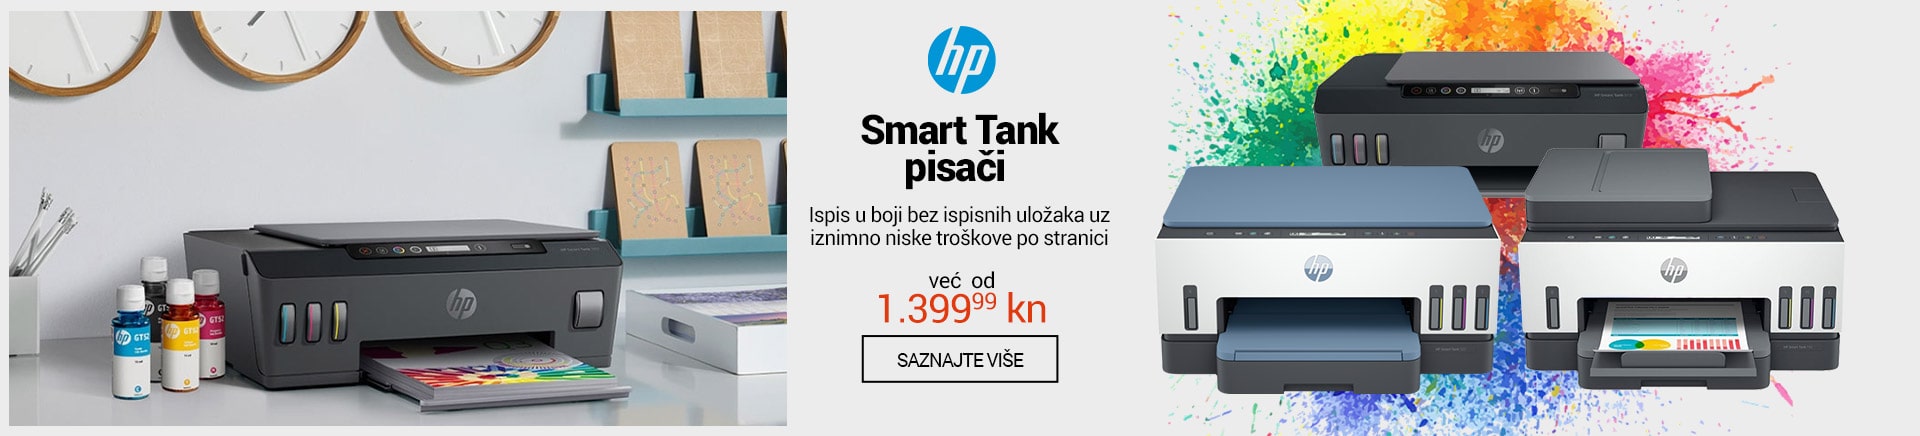 HP Smart Tank pisači od 1.399,99 kn